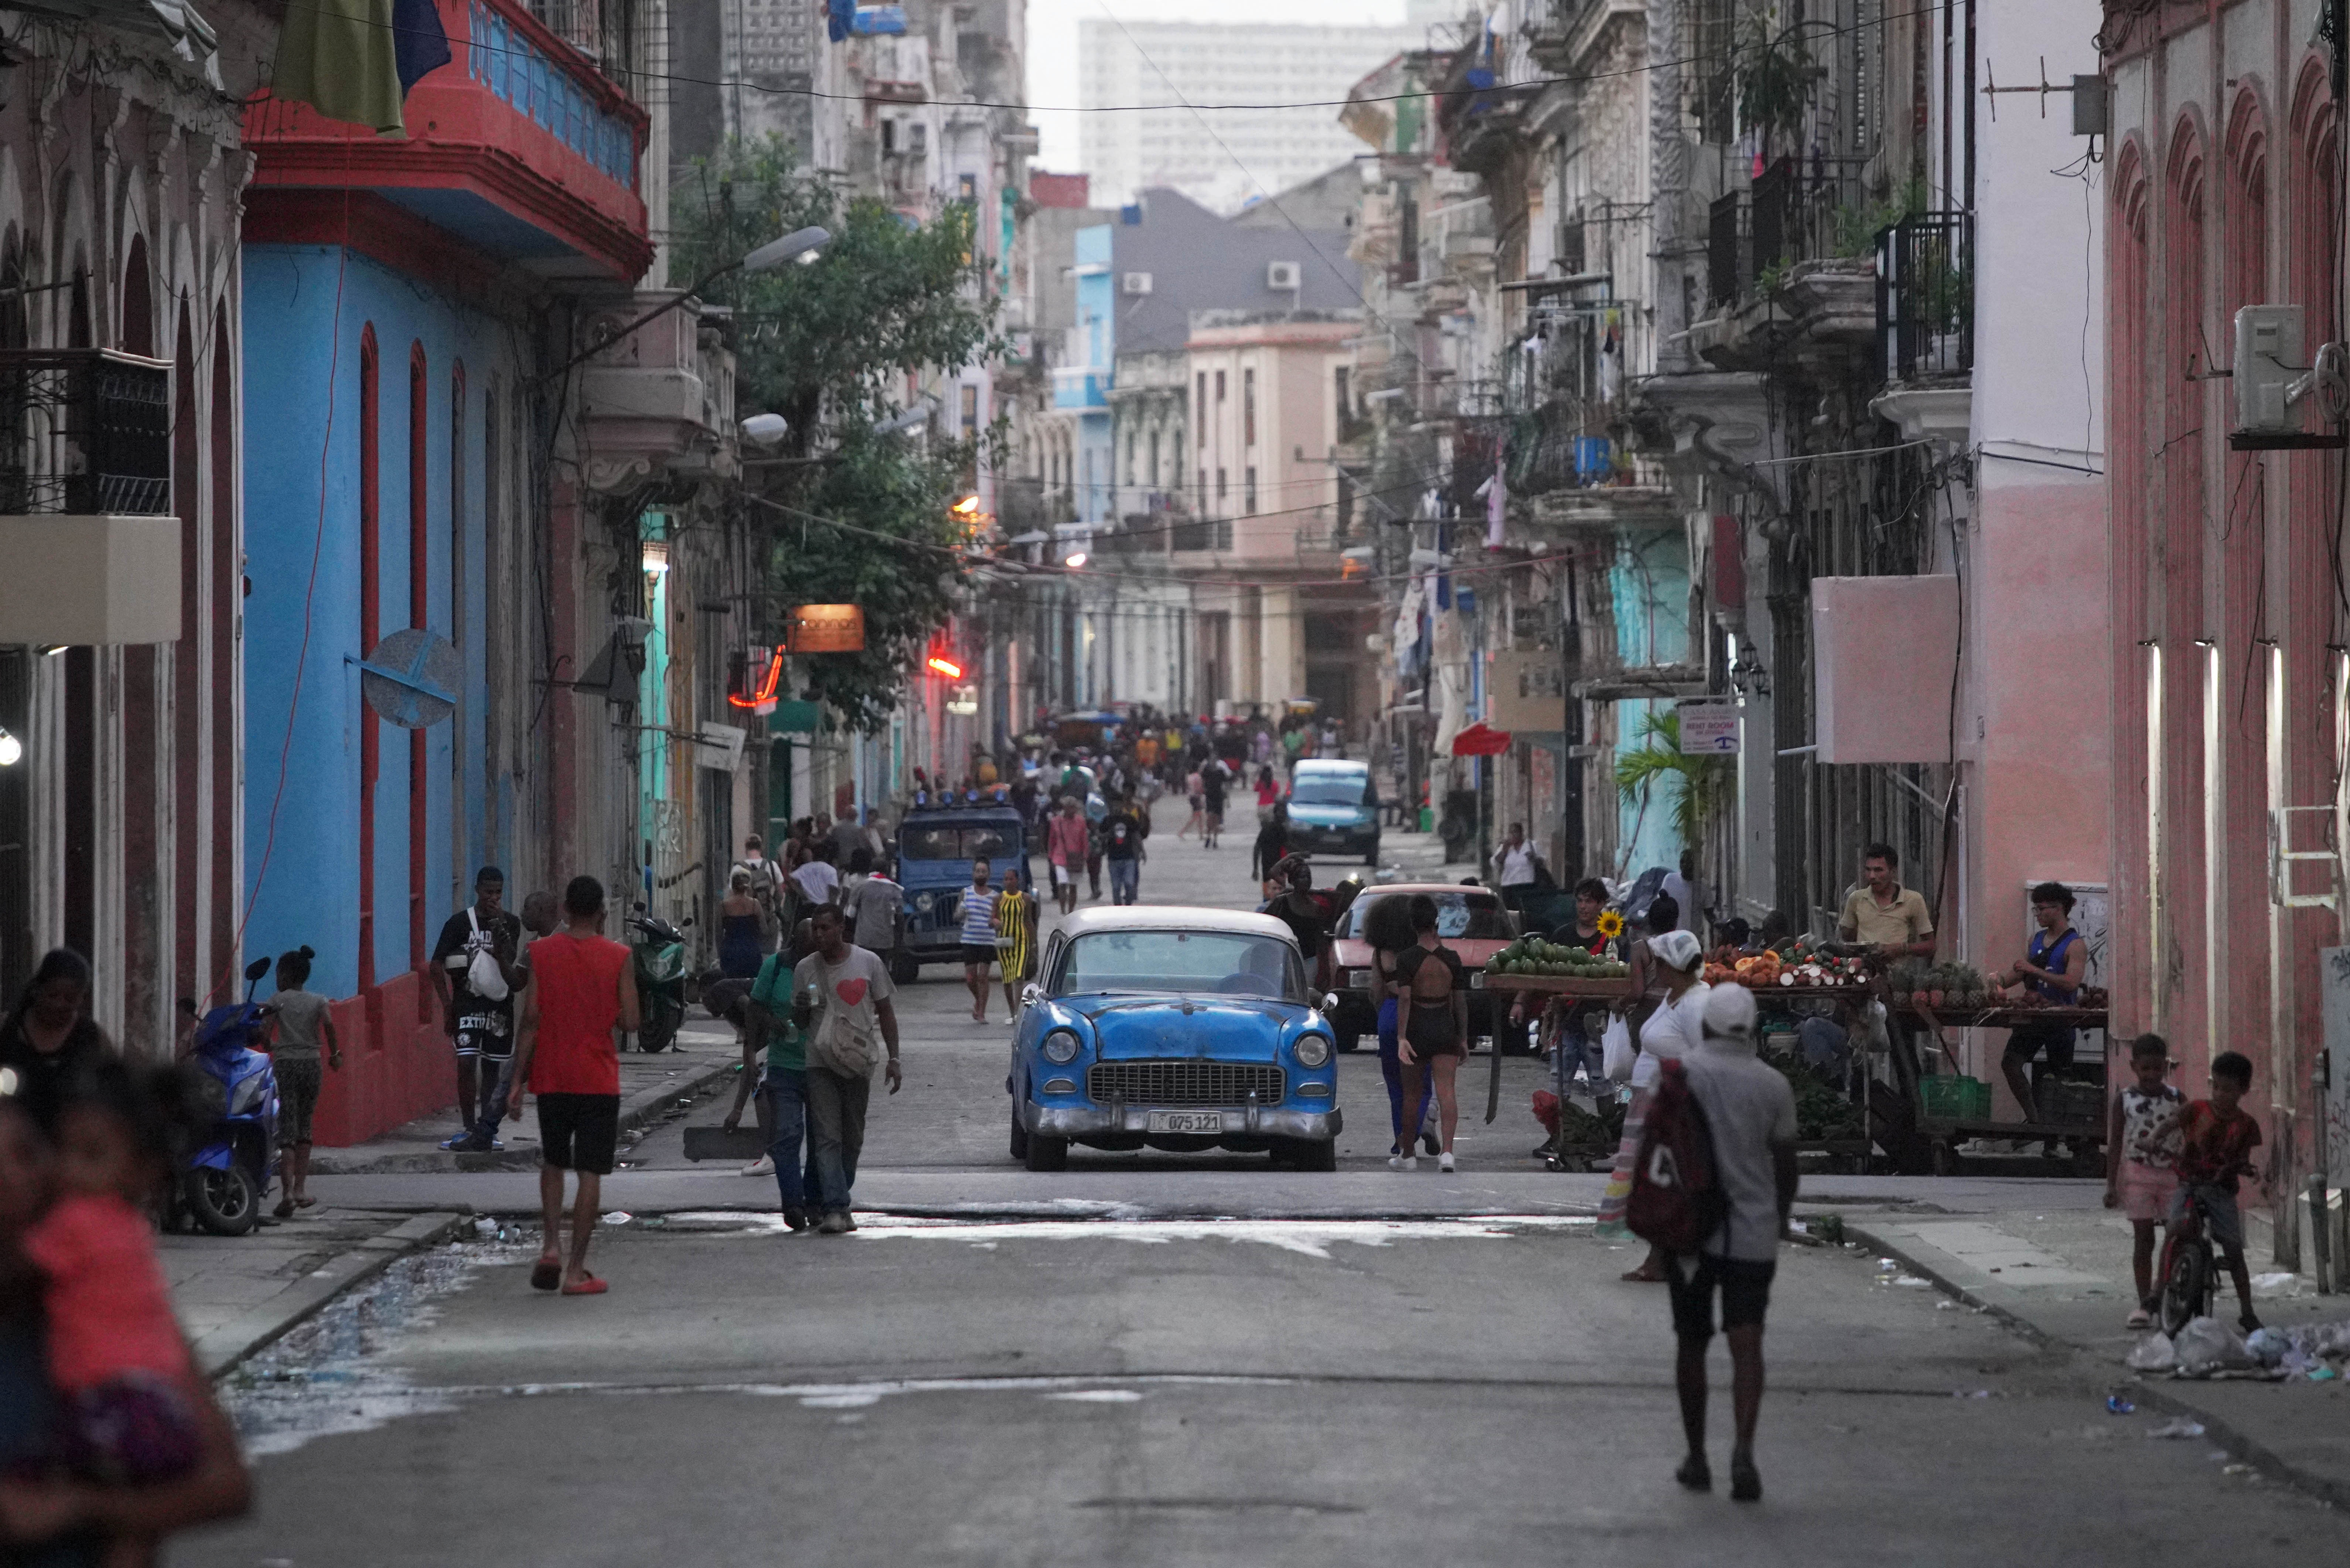 Cuban ministers reveal details of food, fuel shortages amid economic crisis